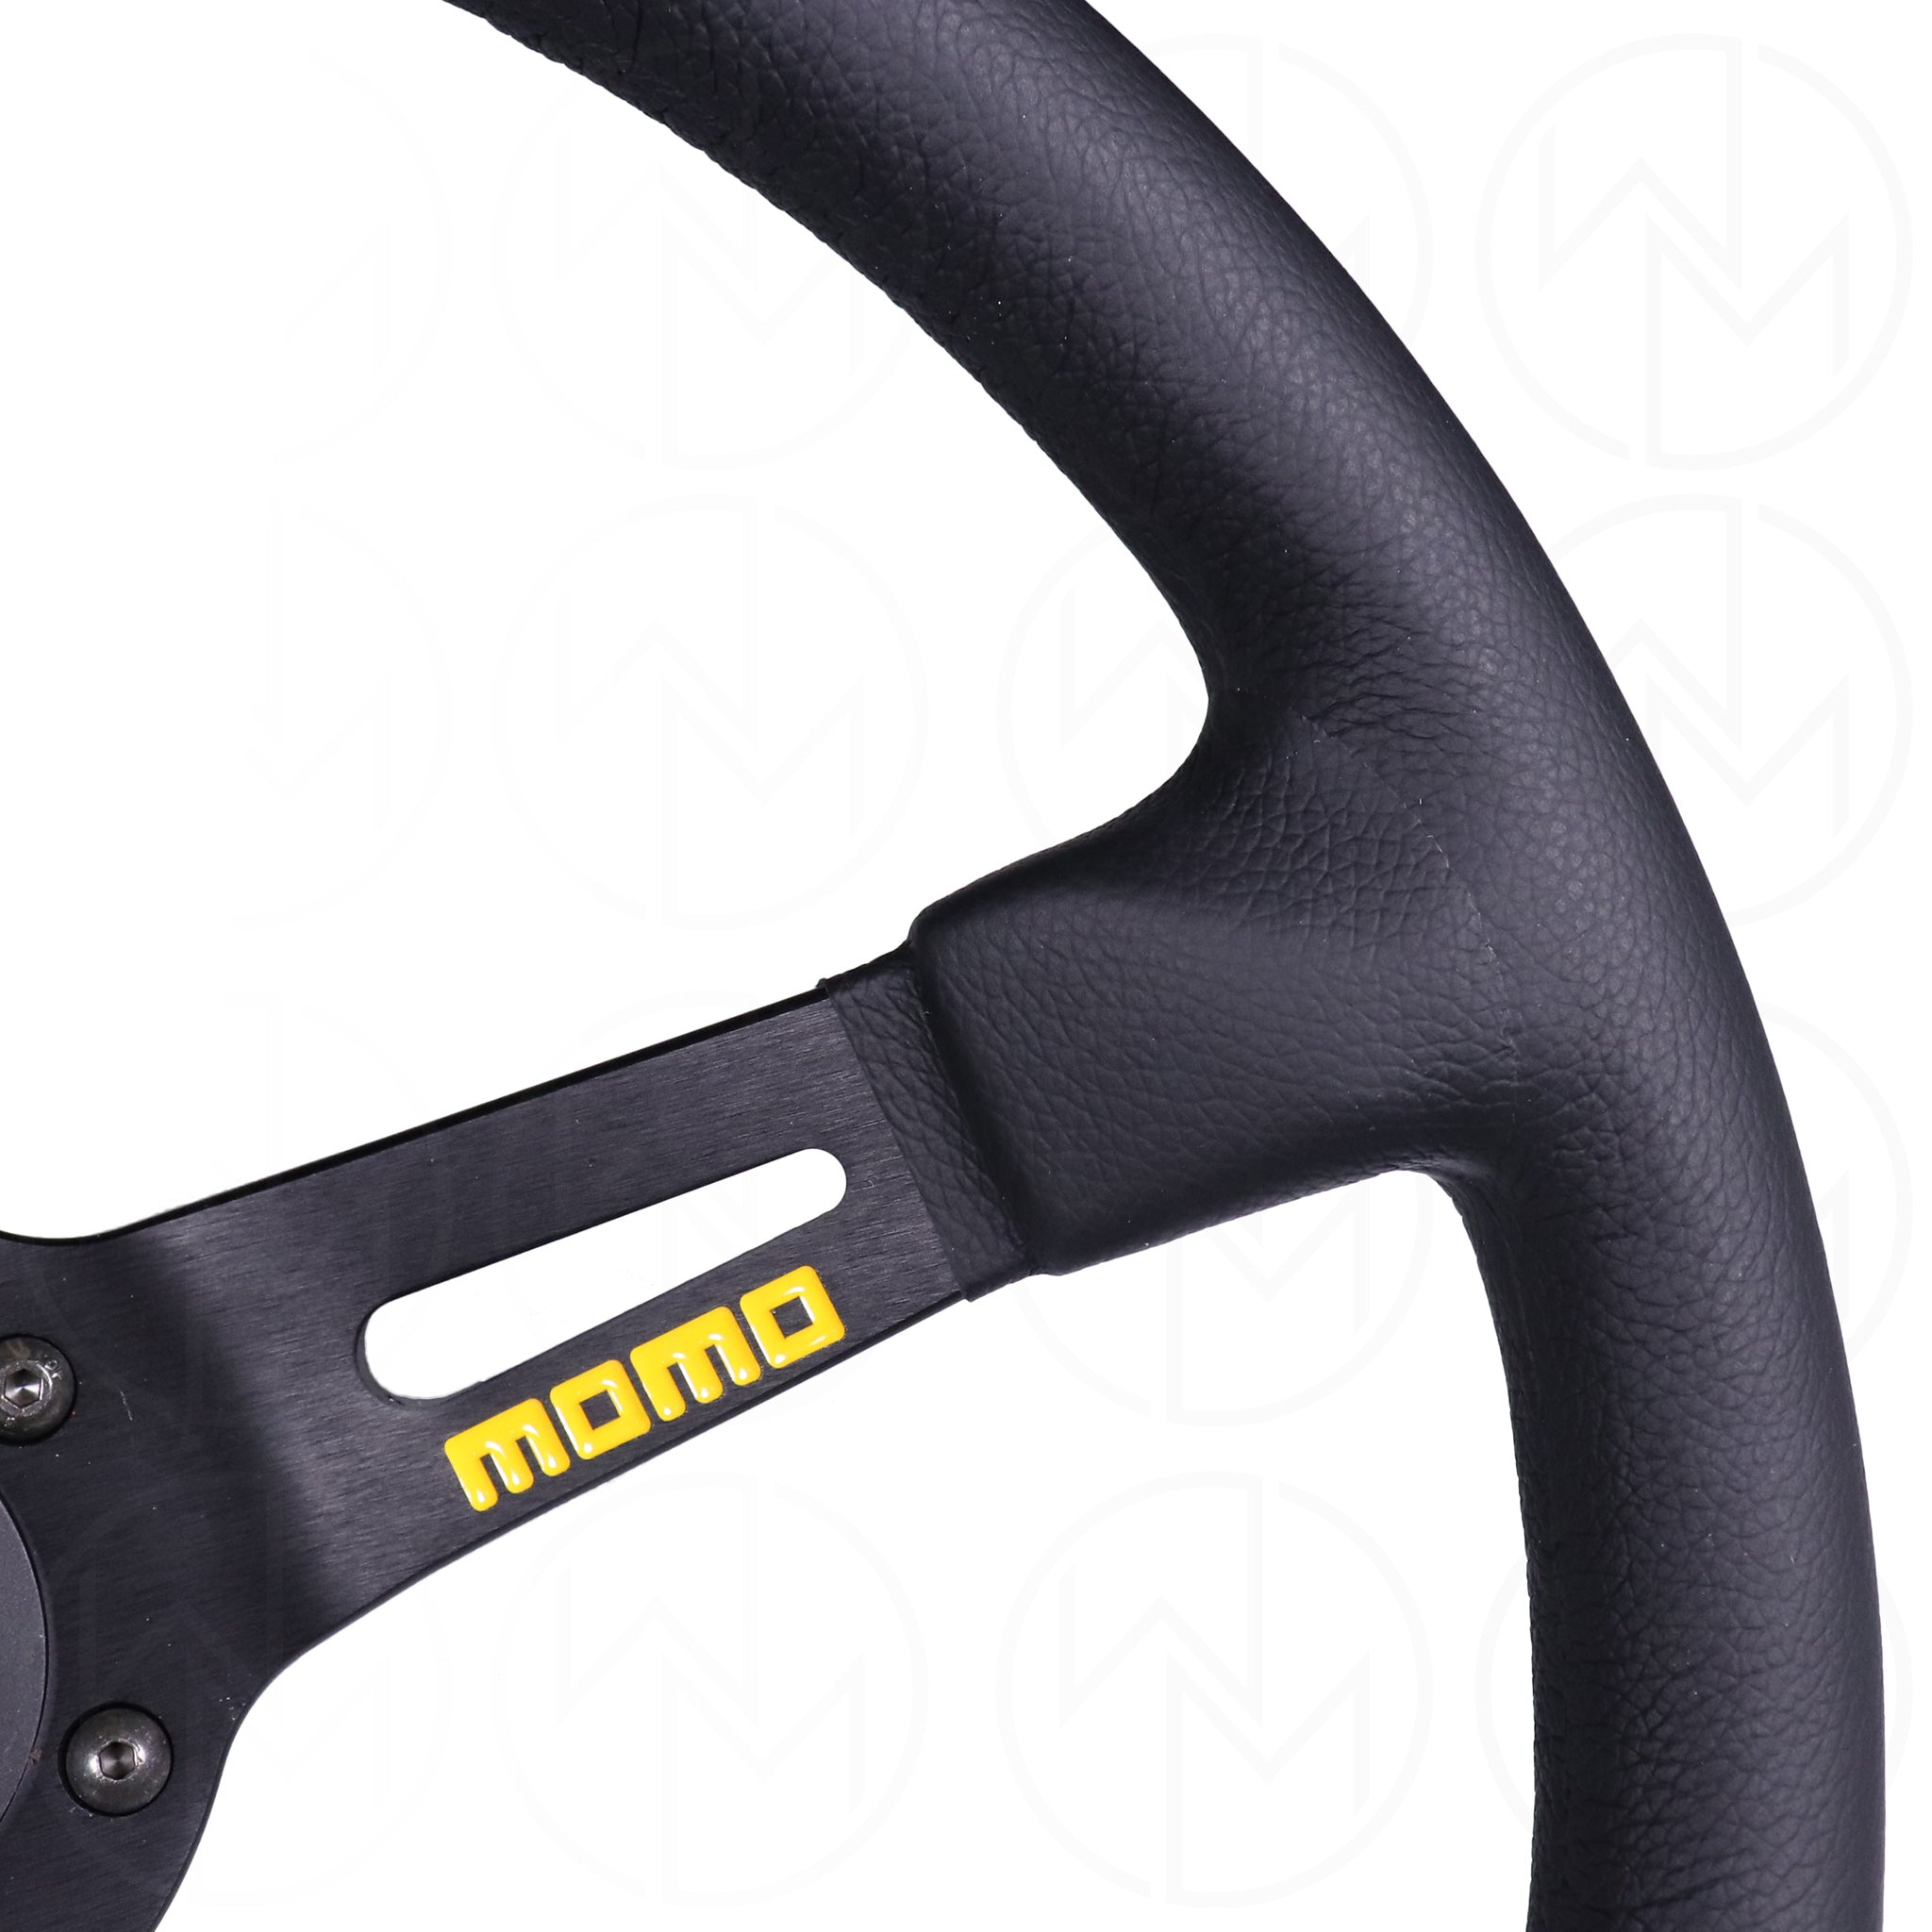 Momo Mod. 08 Steering Wheel - 350mm Leather w/Yellow Center Stripe